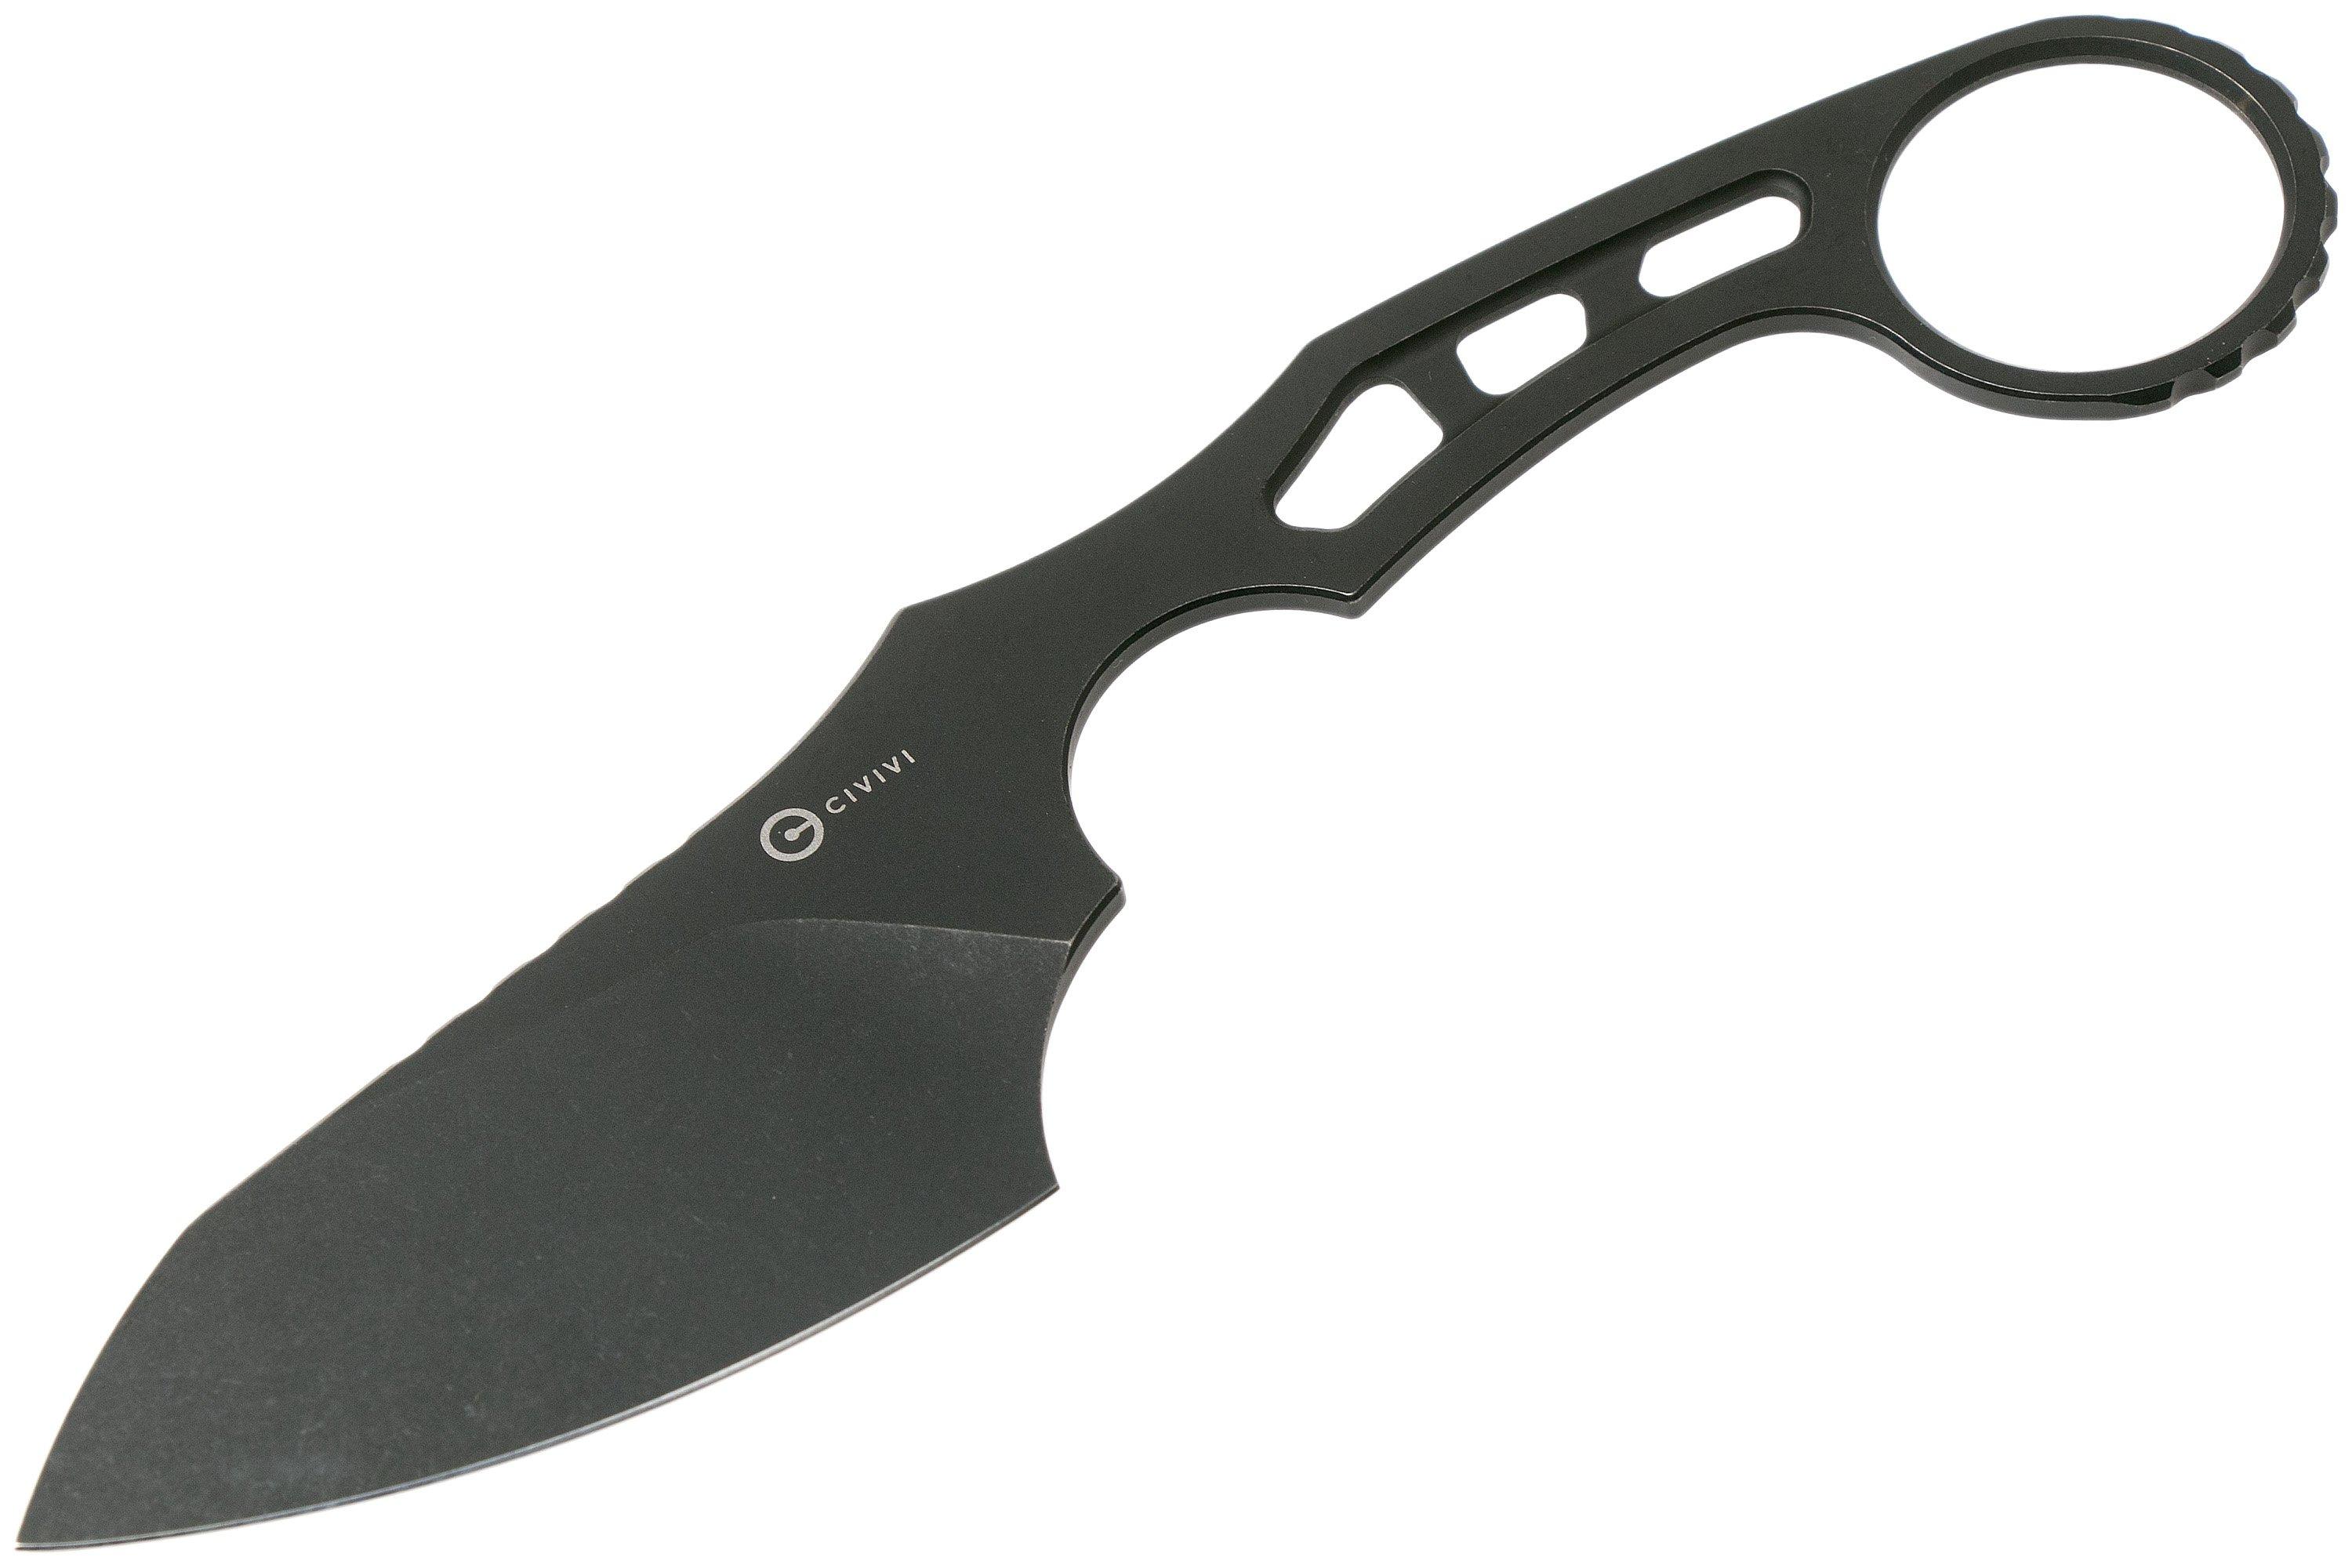 Civivi Planck C2022B Black neck knife, Maciej Torbé design ...